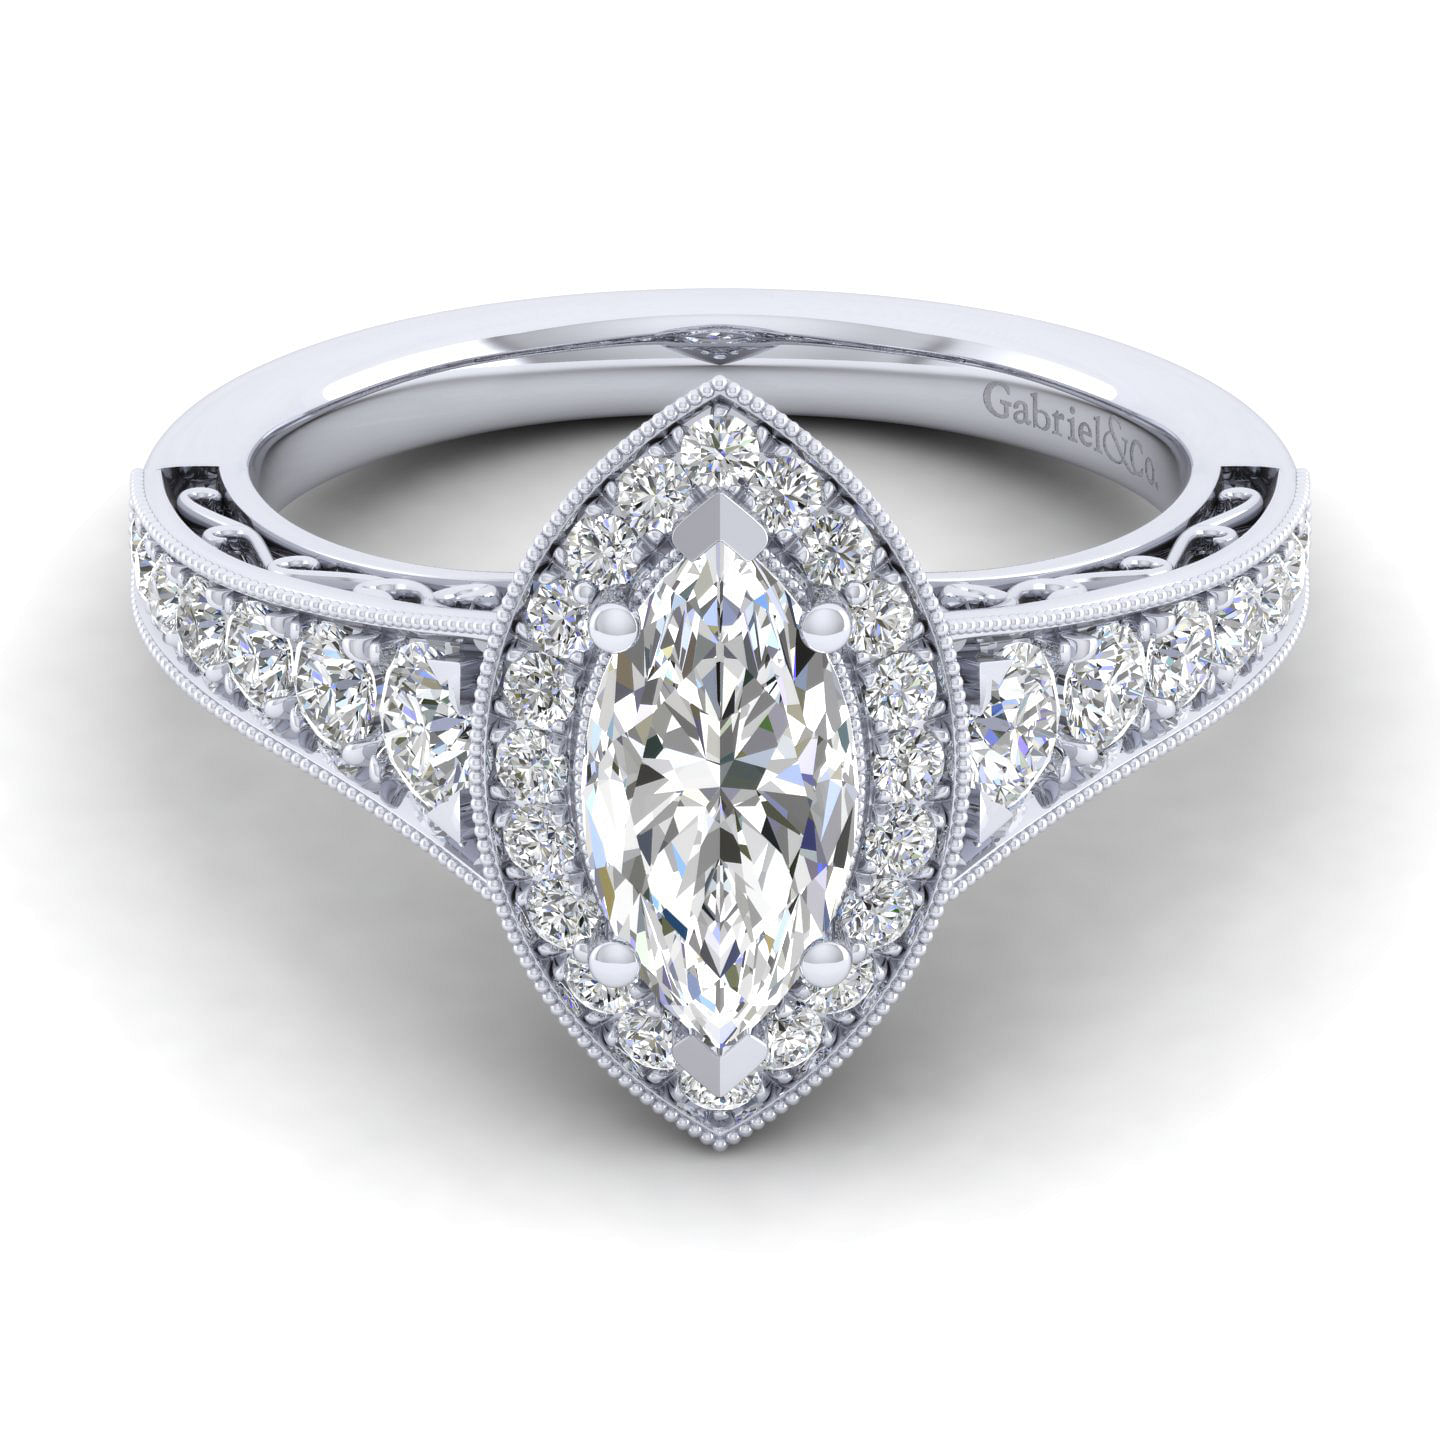 Florence - Vintage Inspired 14K White Gold Marquise Halo Diamond Engagement Ring